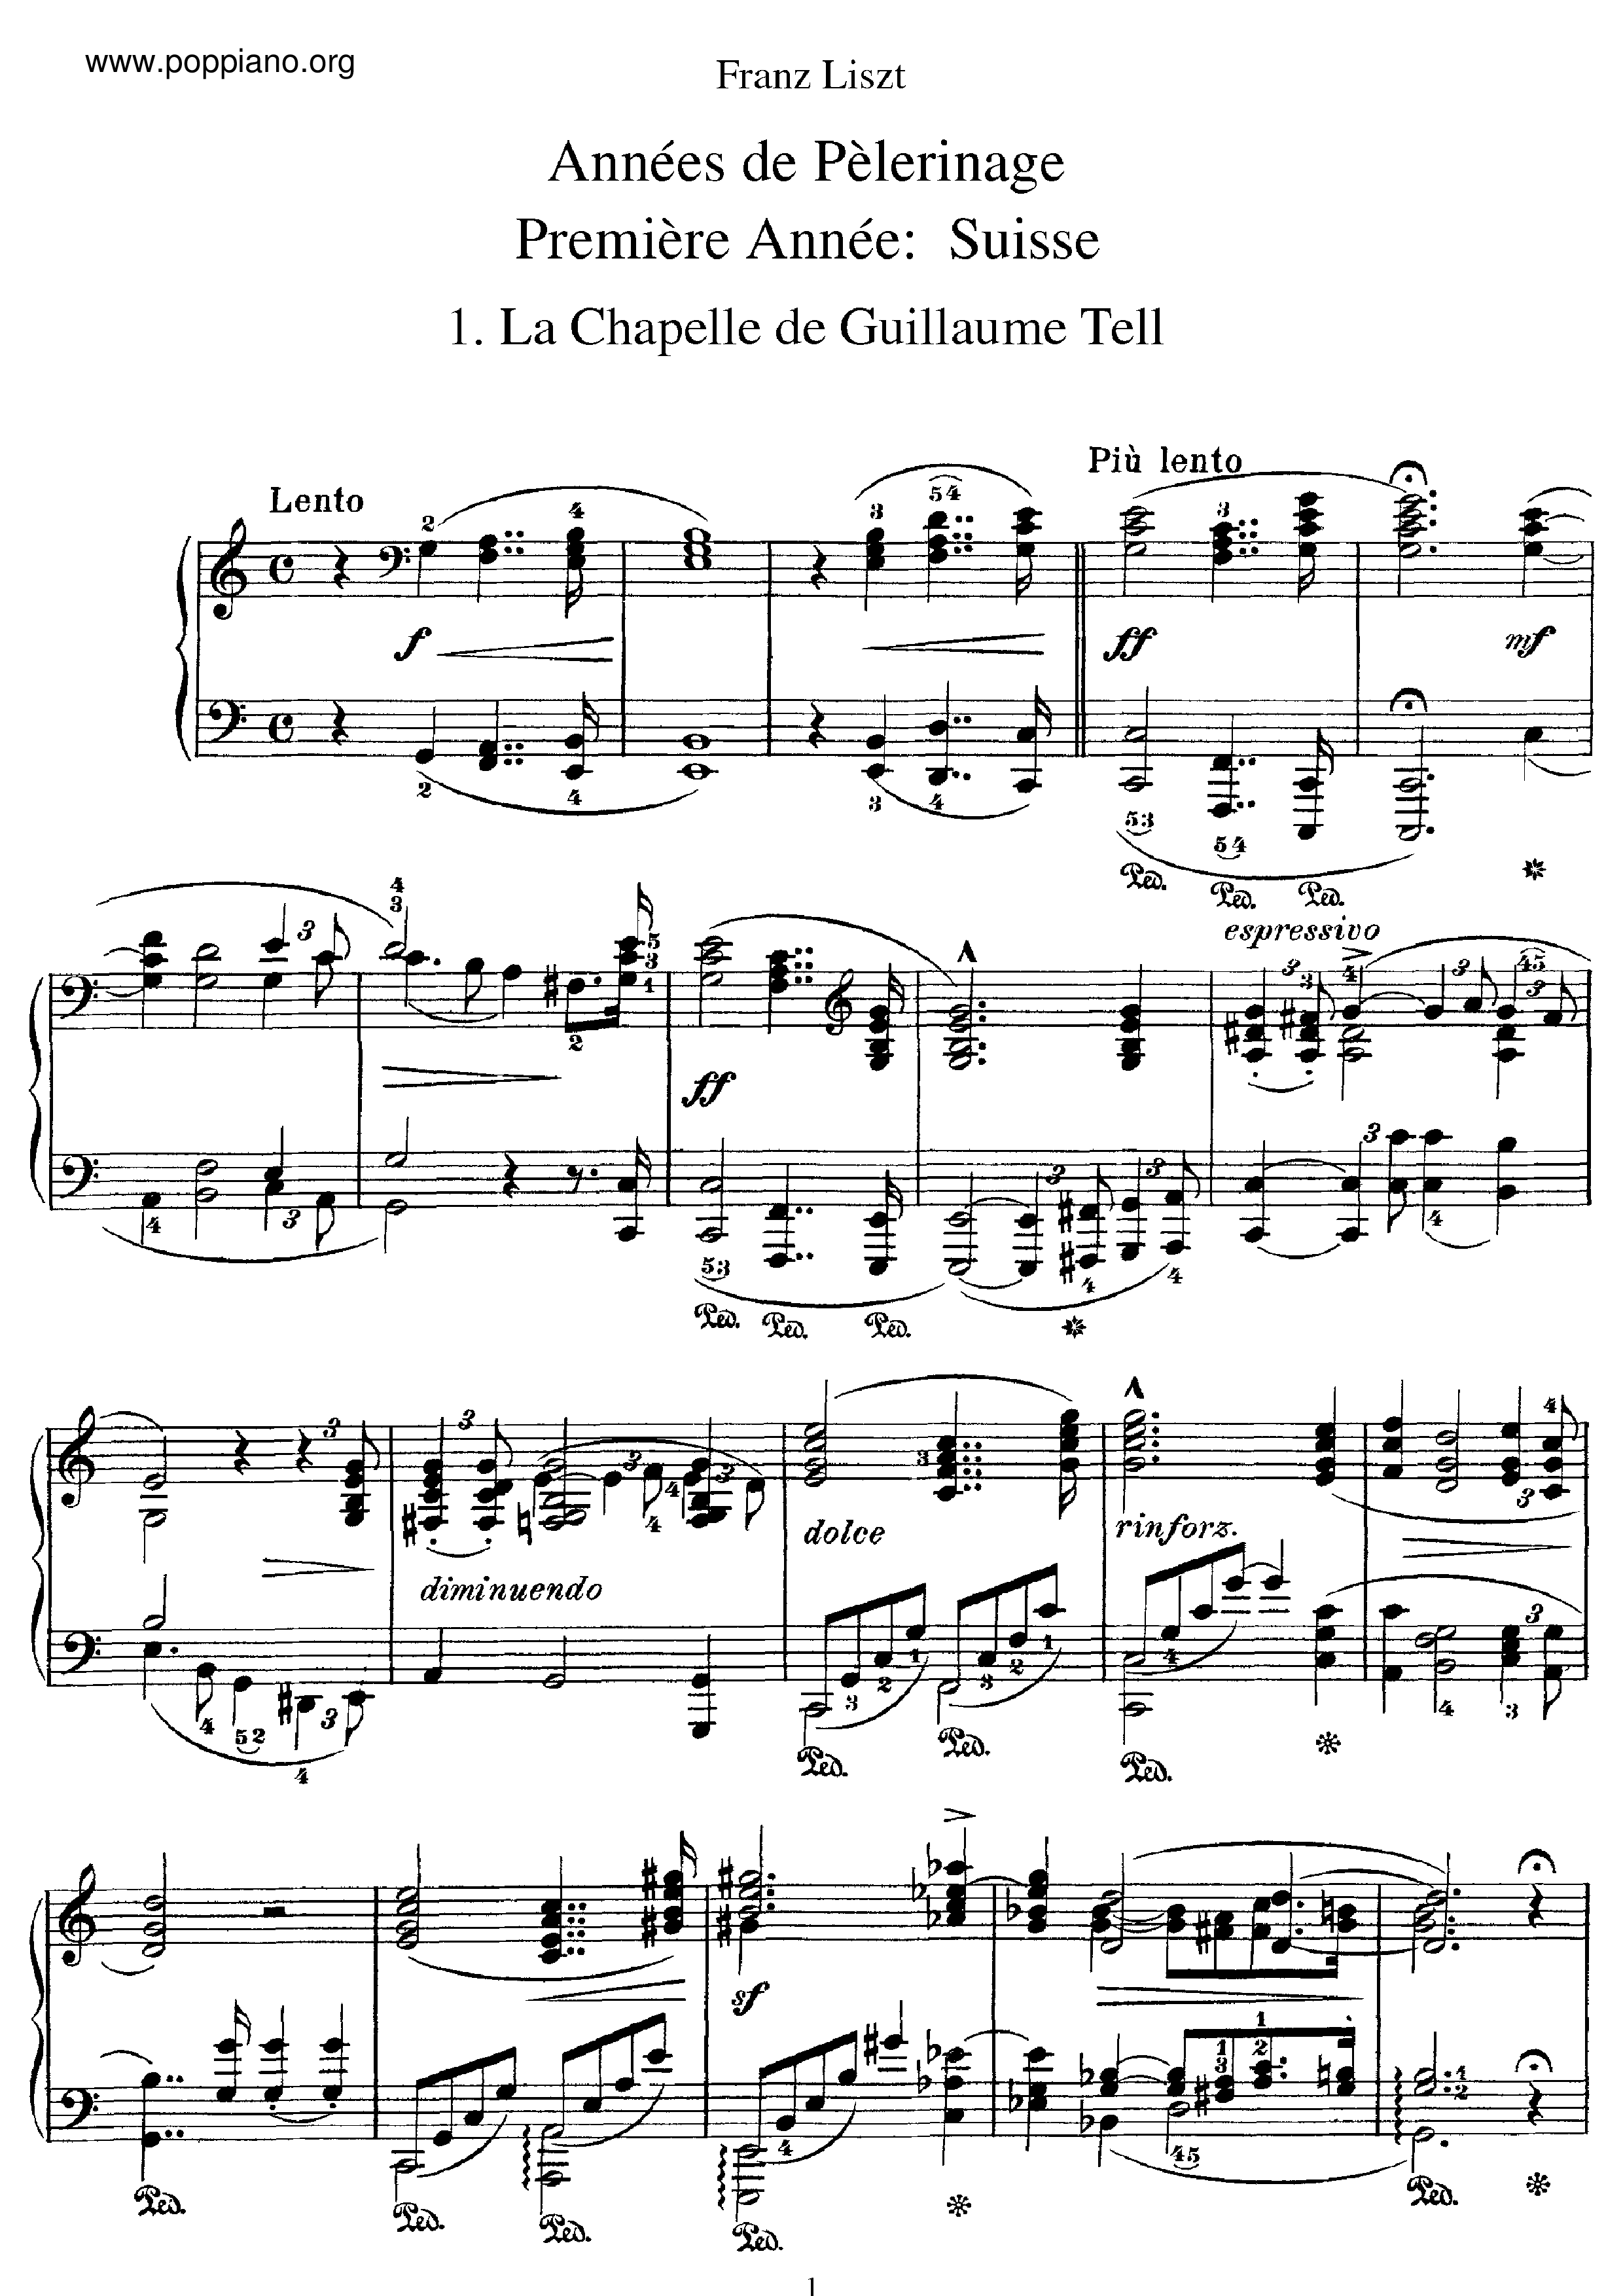 Premiere Annee: Suisse, S.160 Score